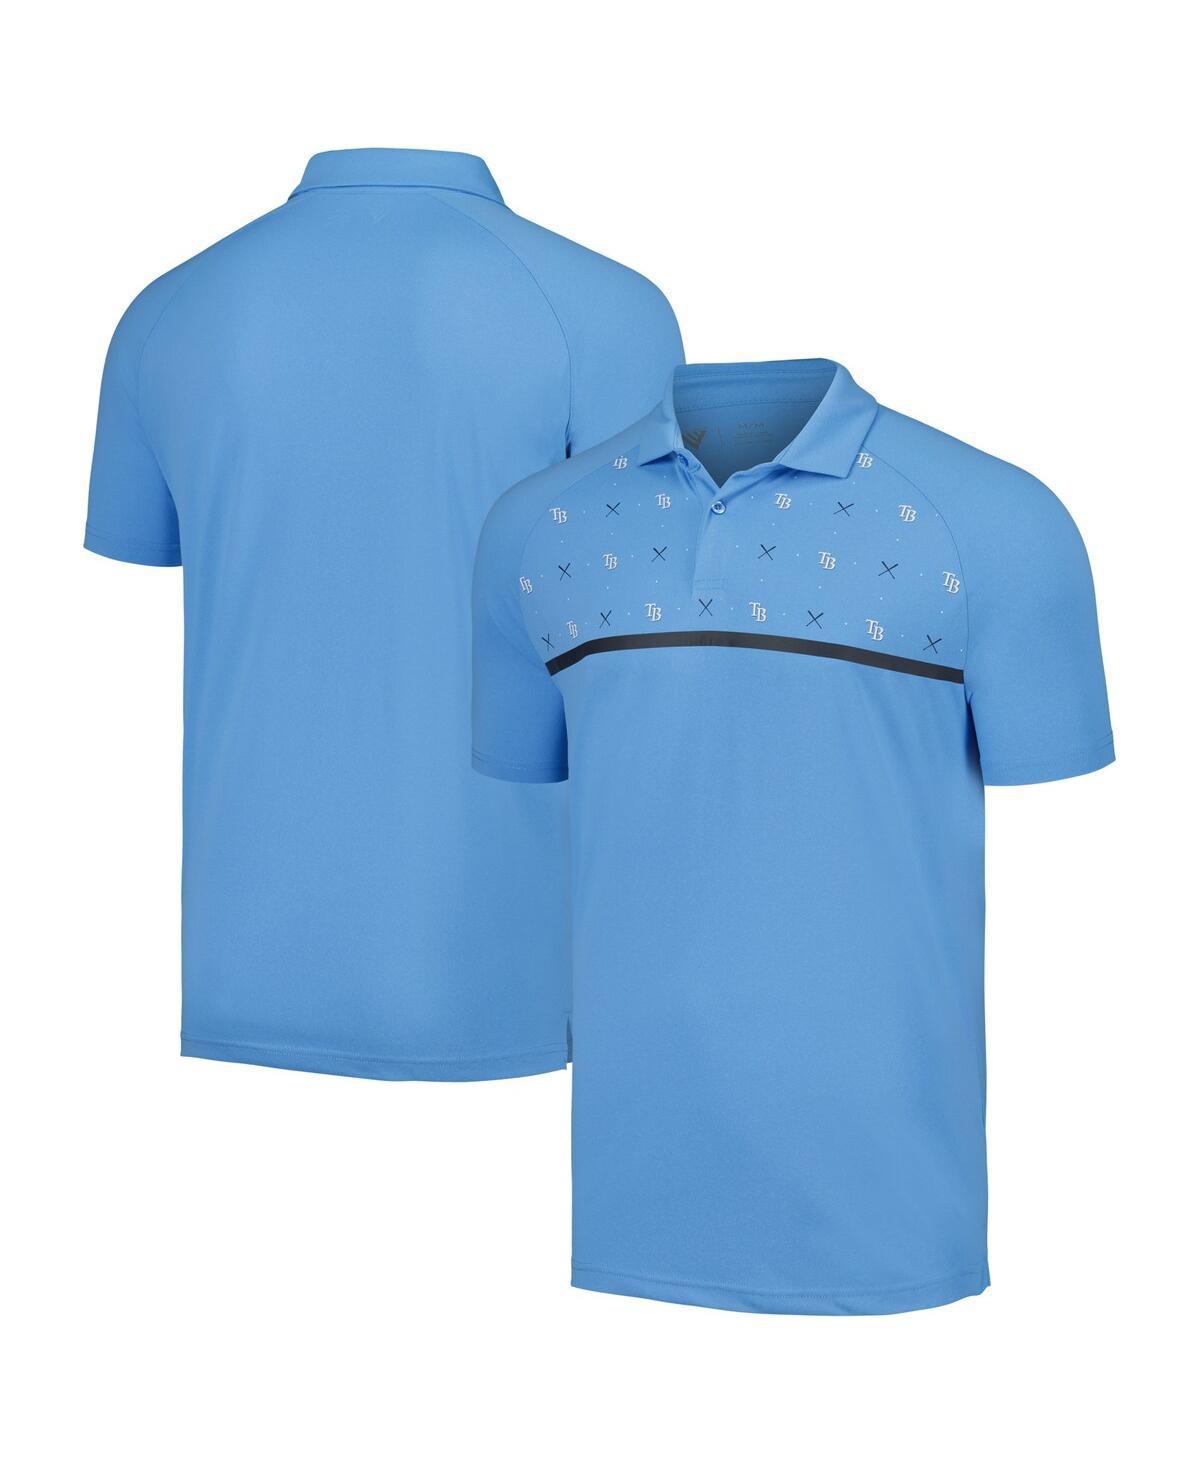 Men's LevelWear Light Blue Tampa Bay Rays Sector Batter Up Raglan Polo Shirt - Light Blue